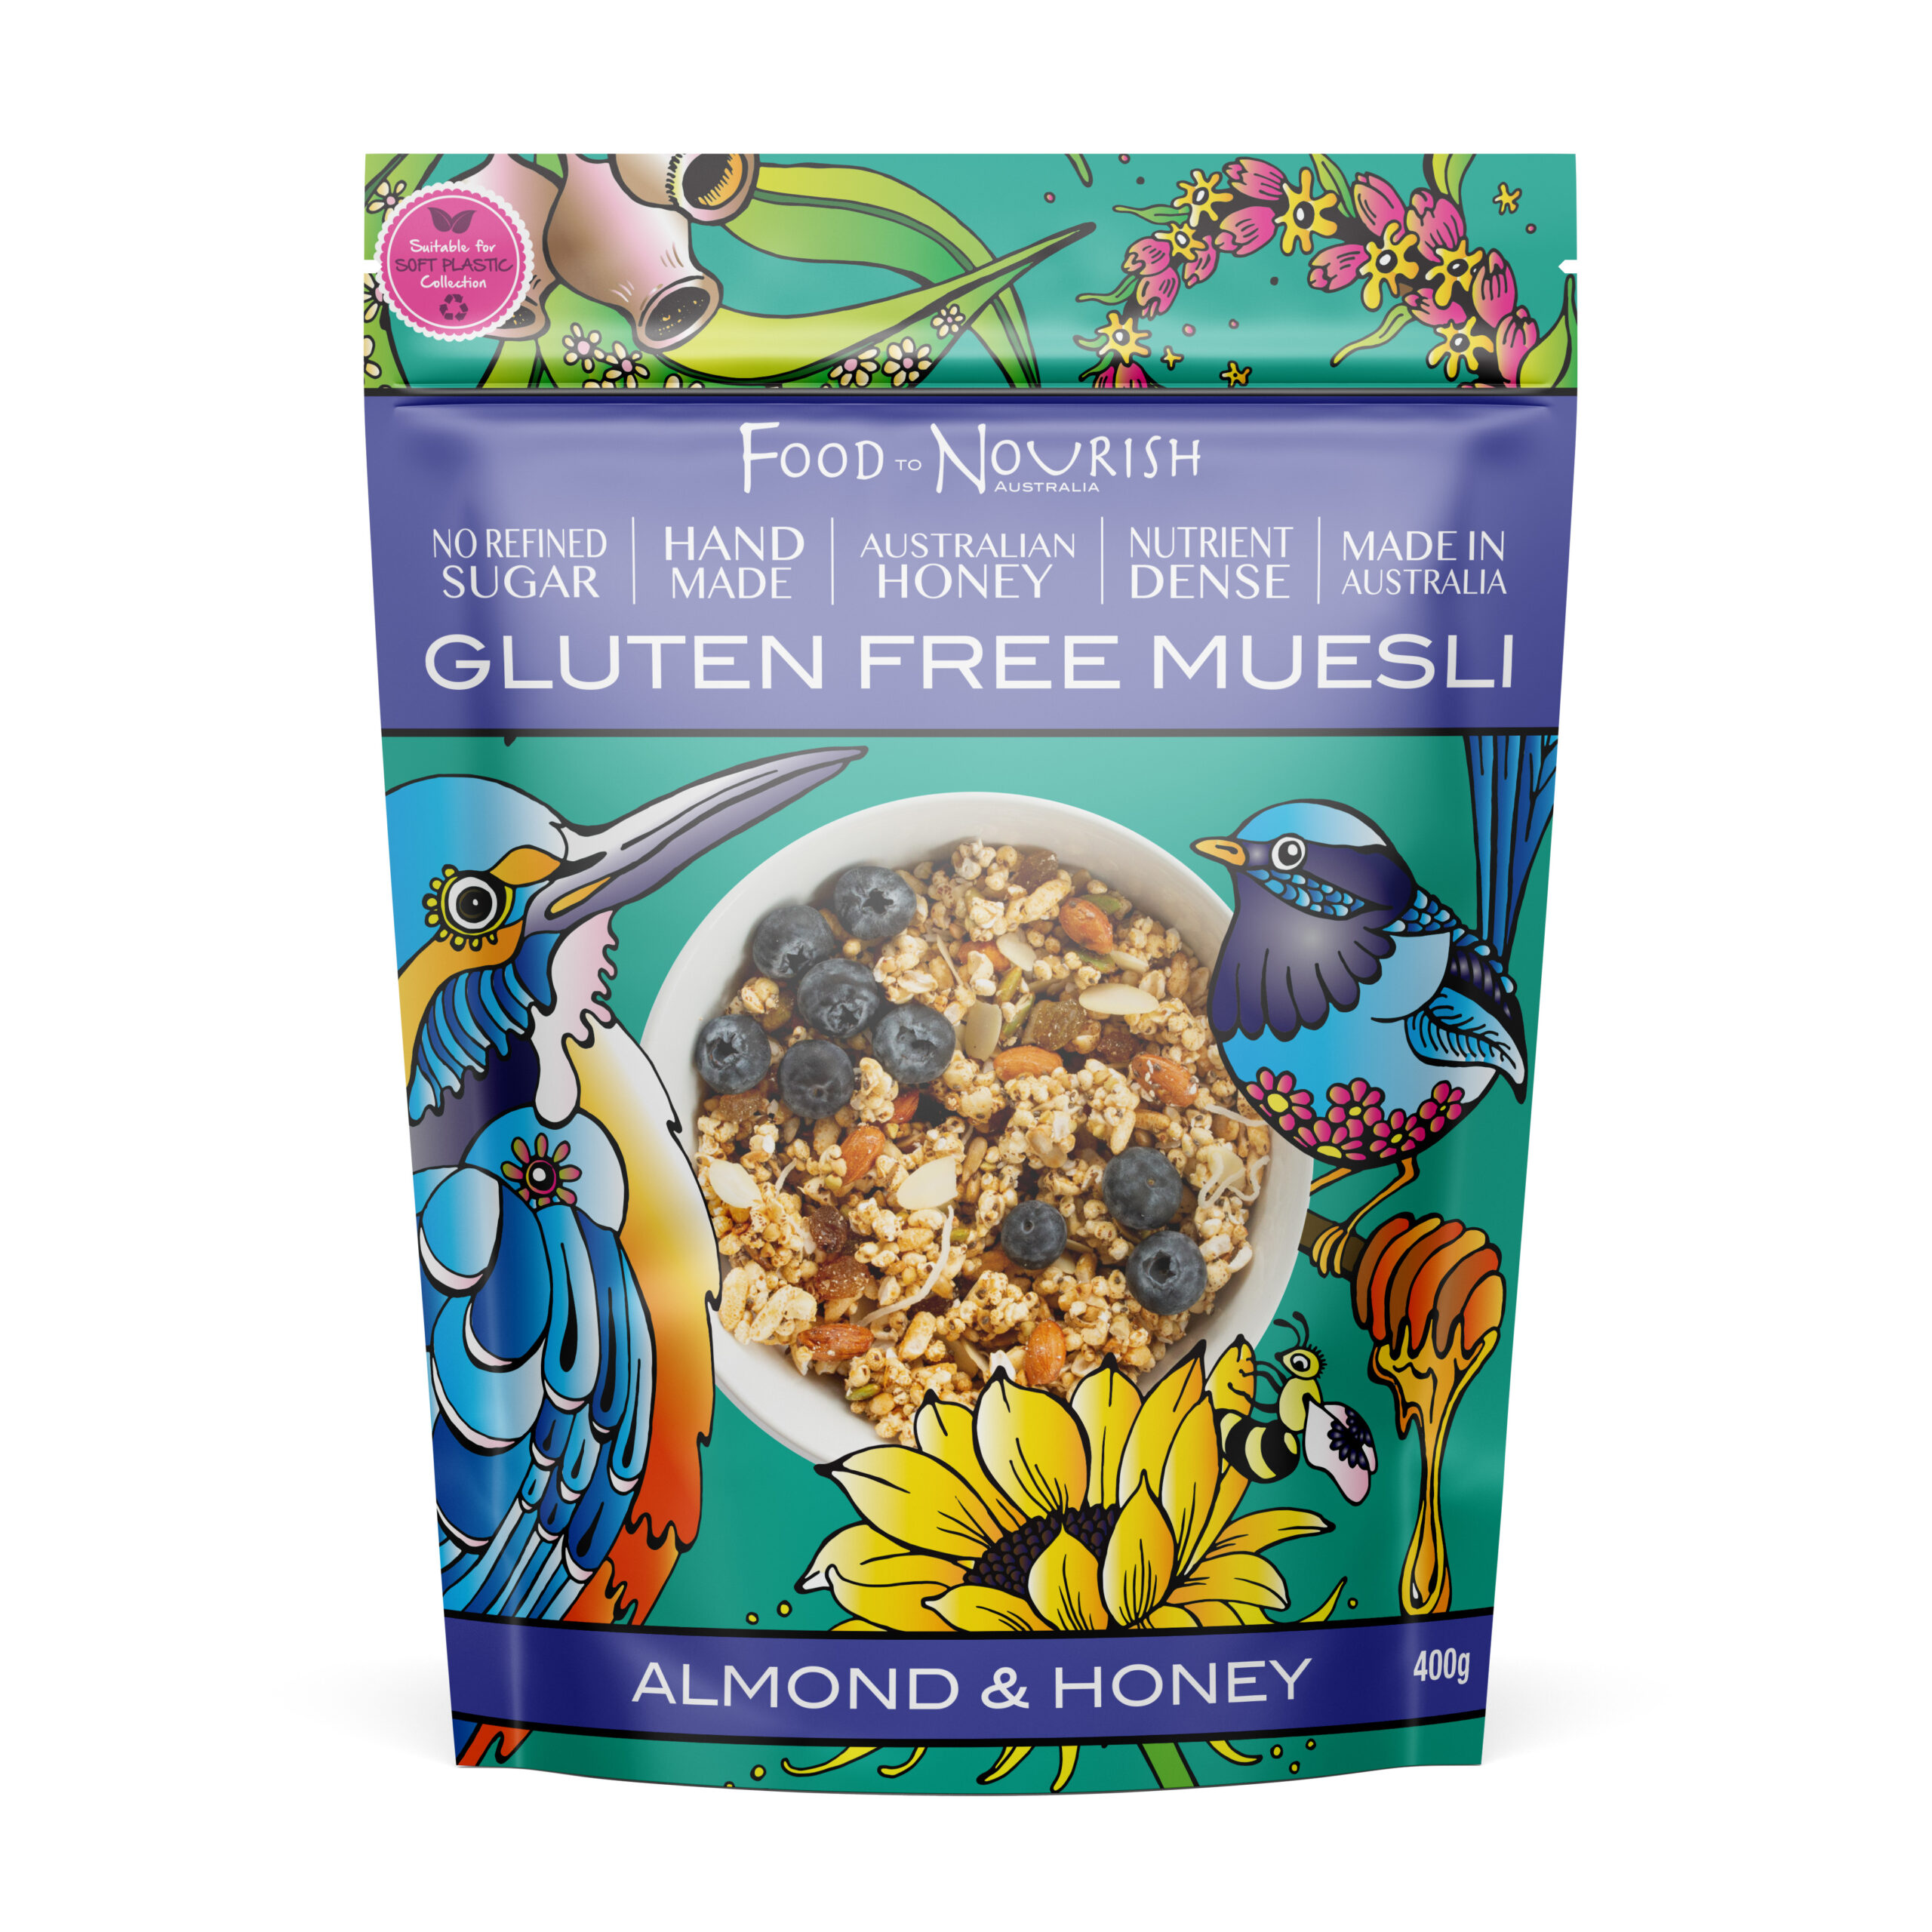 Gluten Free Muesli - Almond & Honey 400g